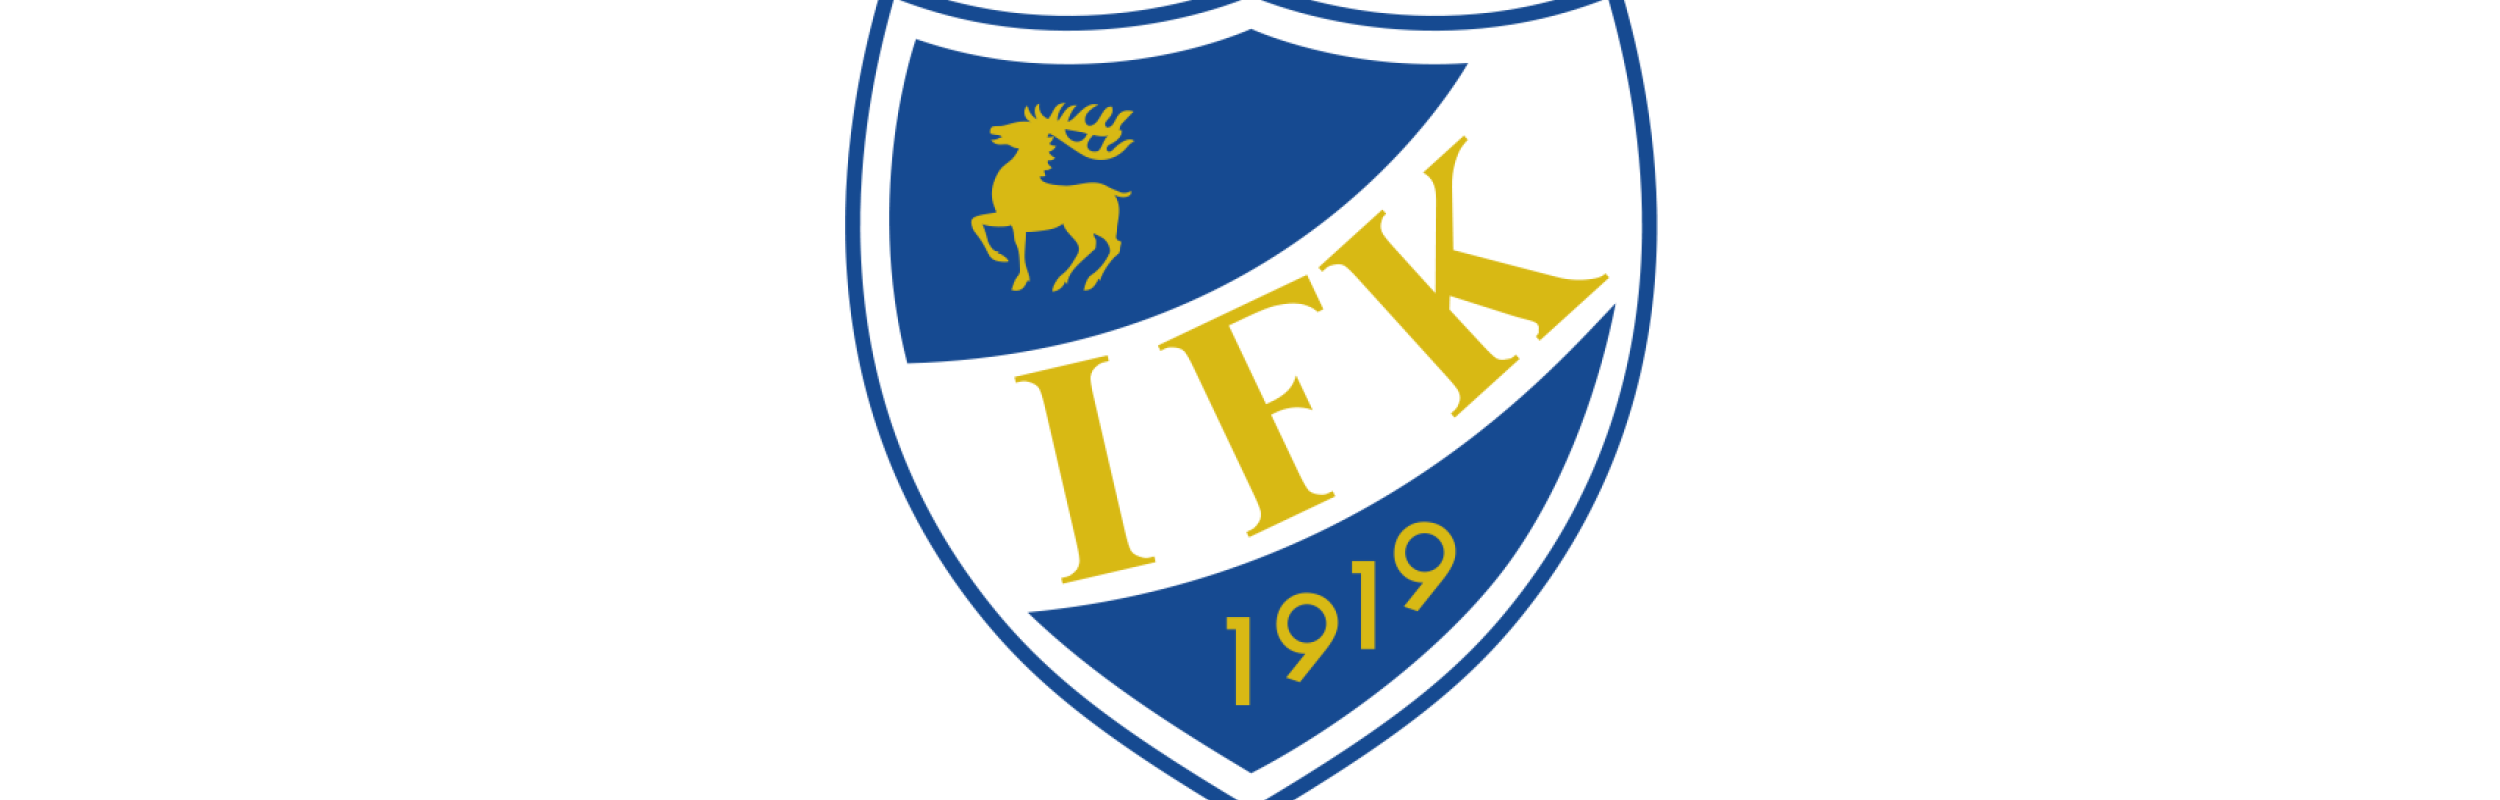 IFK logo nyhet